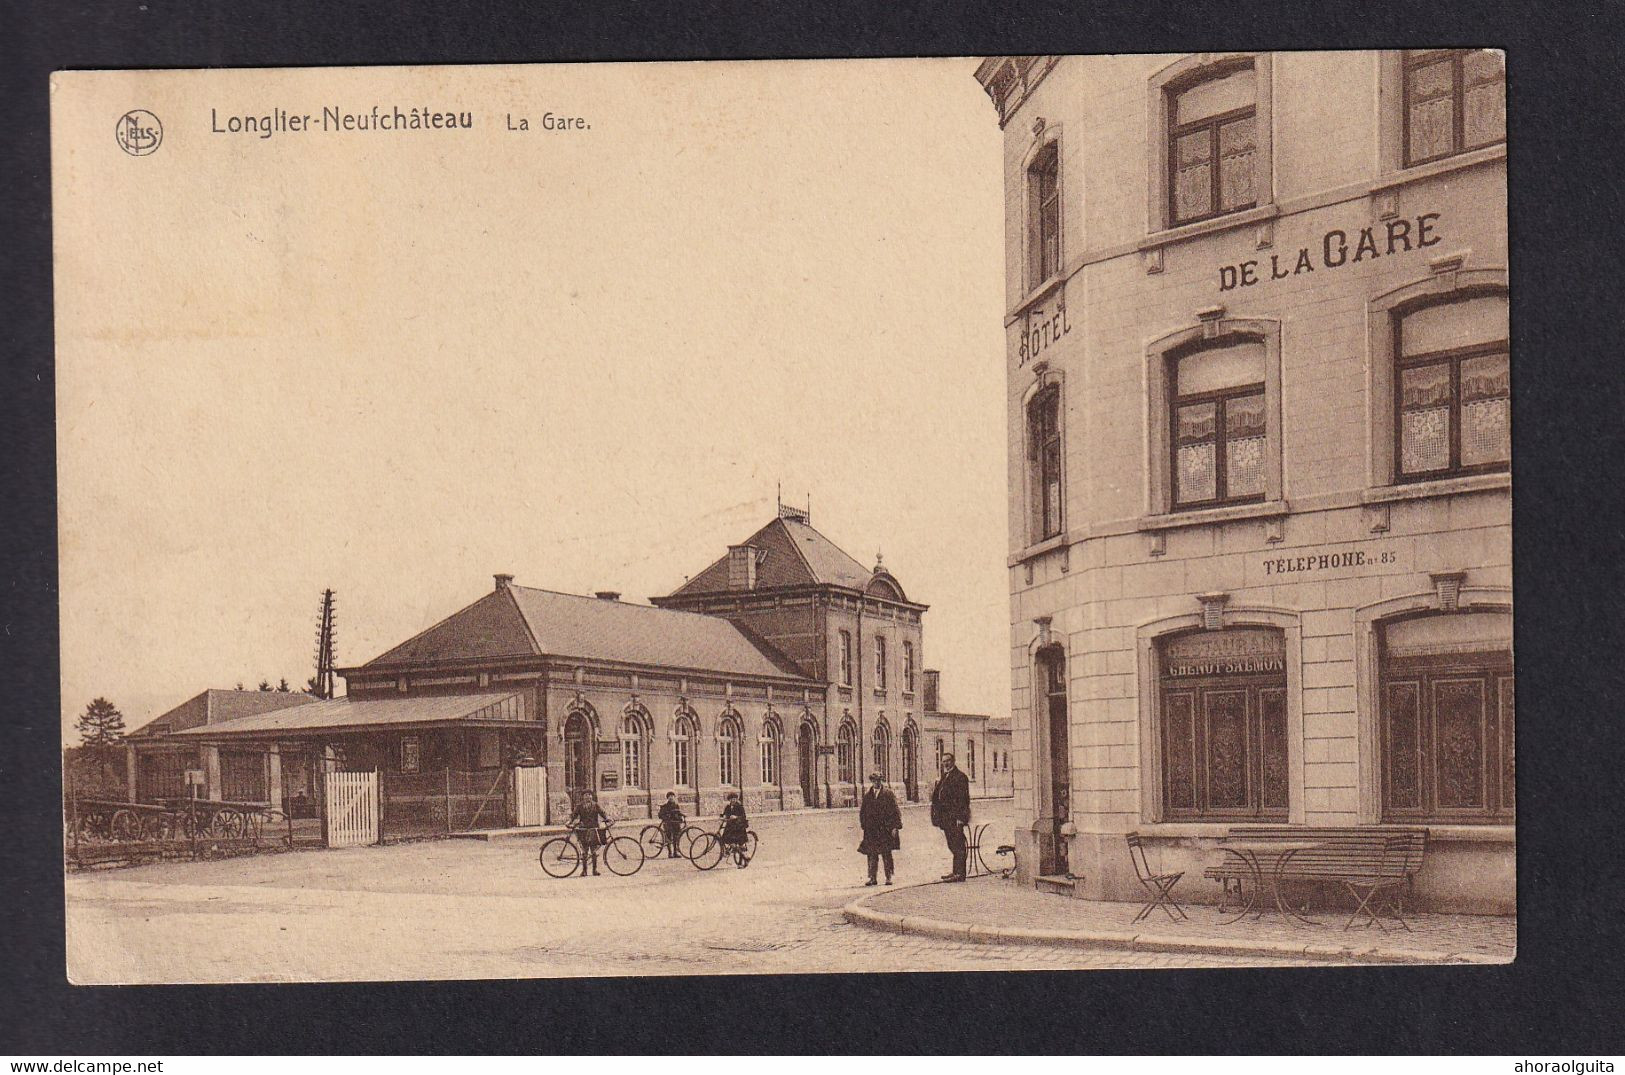 DDAA 422 - Carte-Vue De LONGLIER-NEUFCHATEAU - La Gare - Circulée Neufchateau 1930 - Neufchâteau